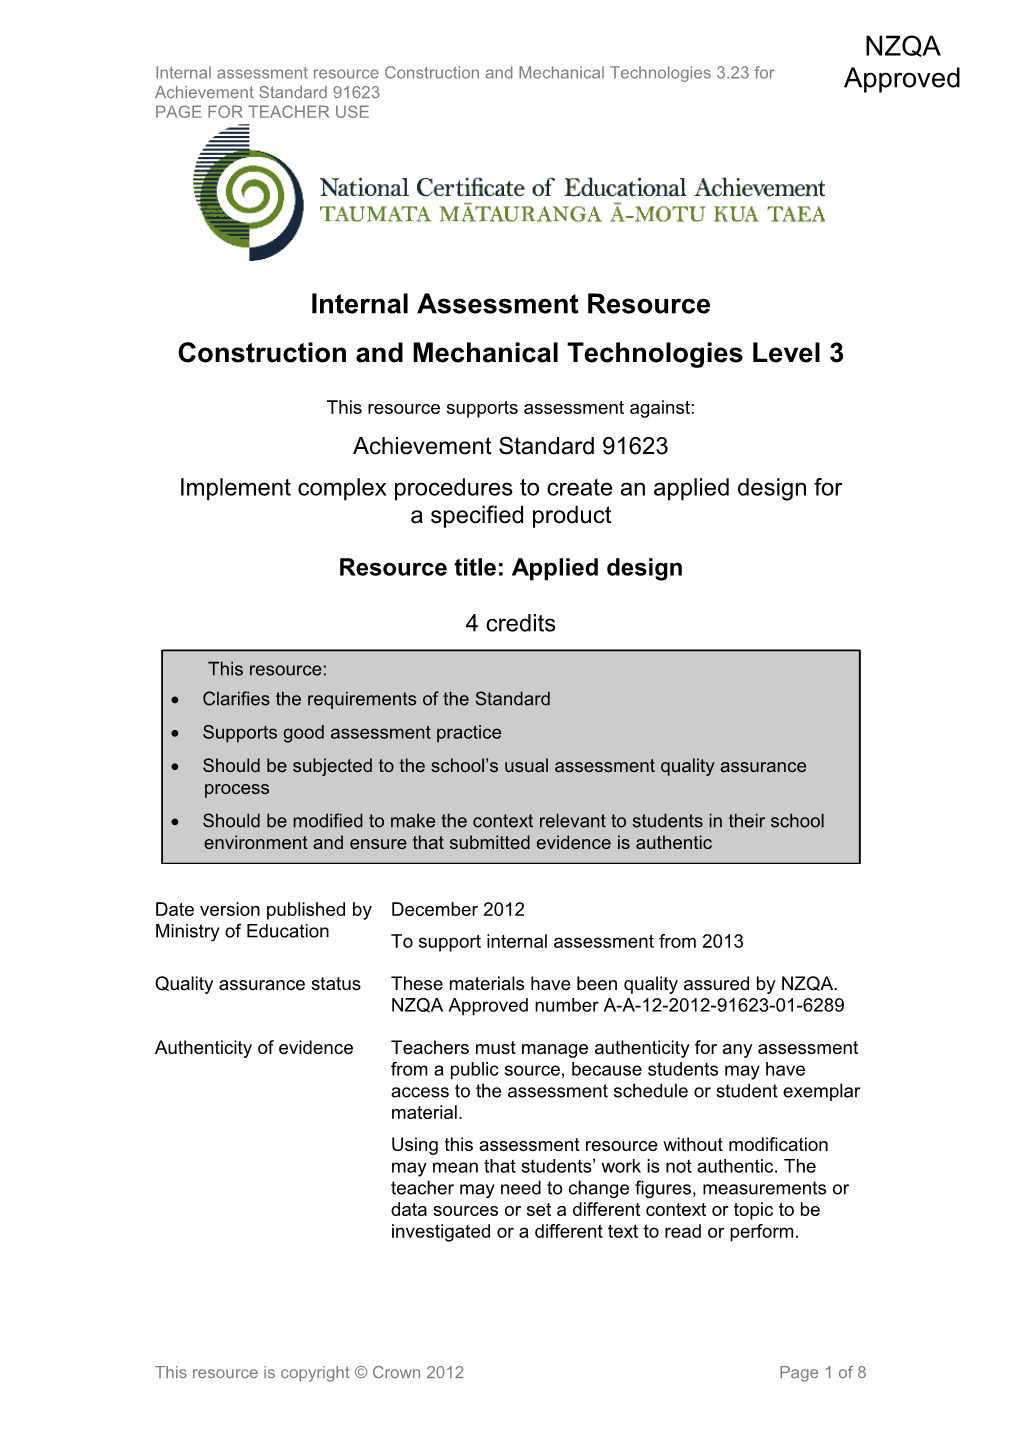 Level 3 Construction and Mechanical Technologies Internal Assessment Resource